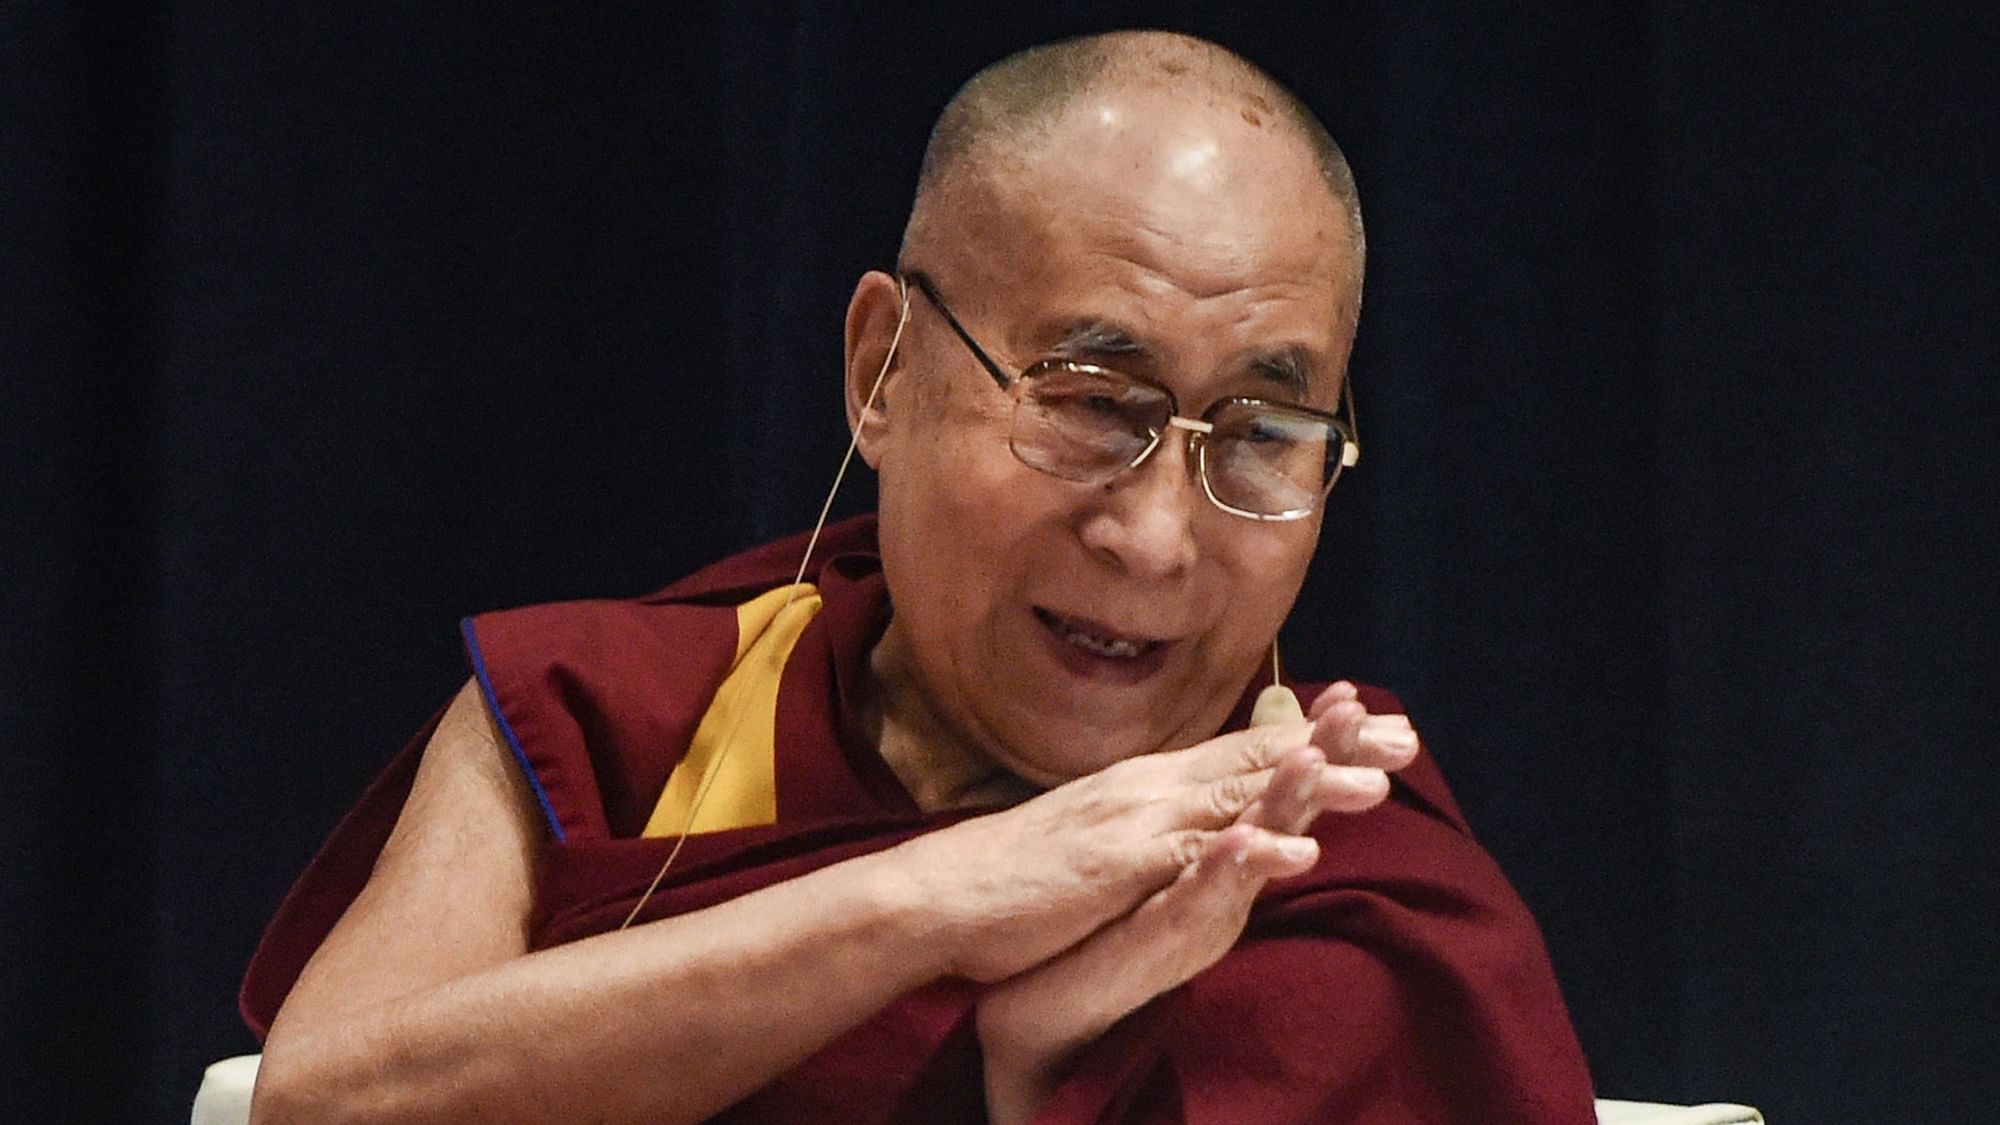 Tibetan spiritual leader Dalai Lama during an event in Mumbai on 12 December.